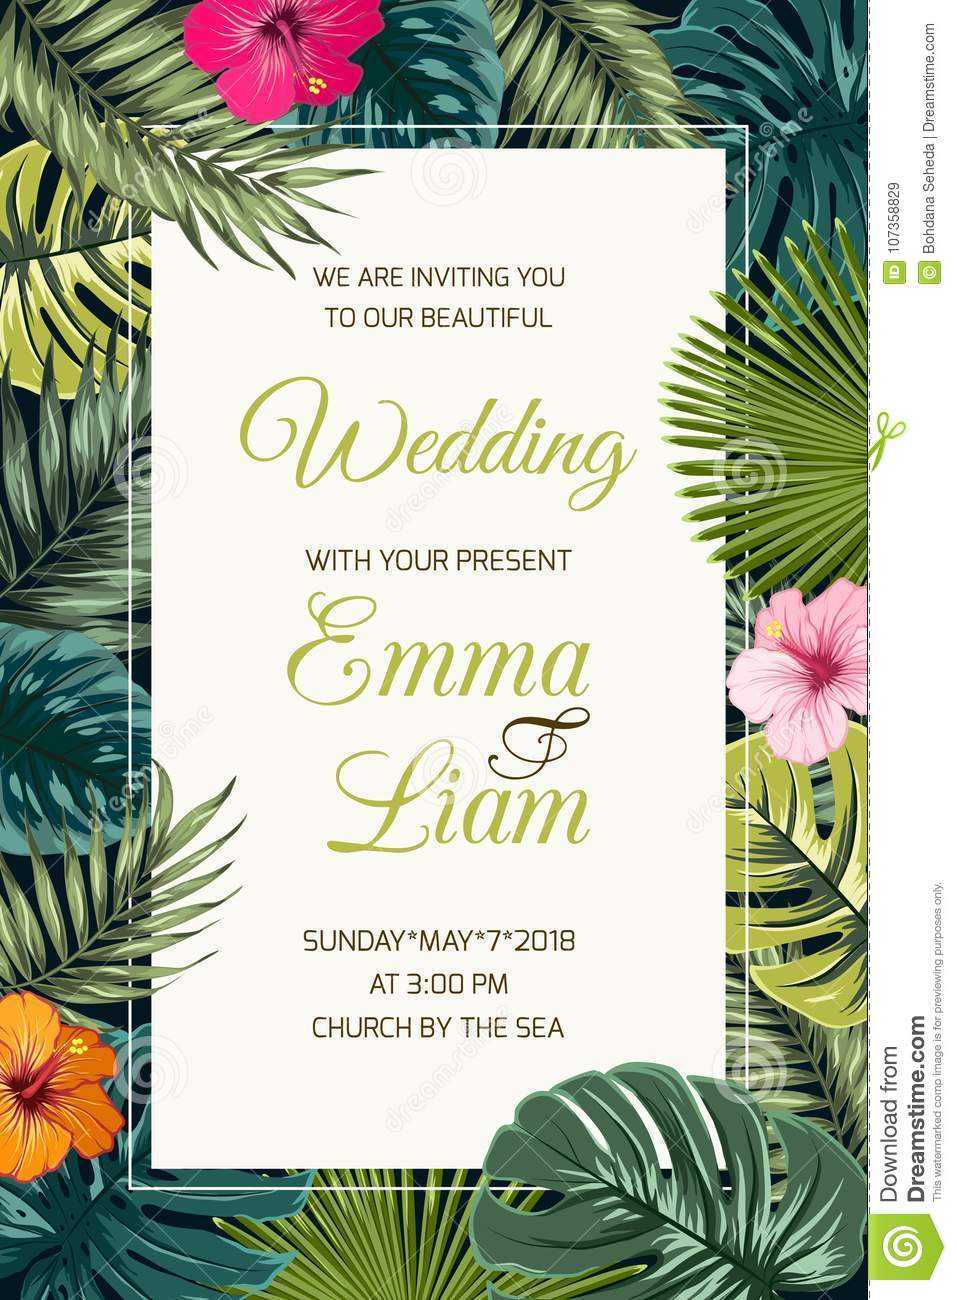 Wedding Event Invitation Card Template. Stock Vector In Event Invitation Card Template